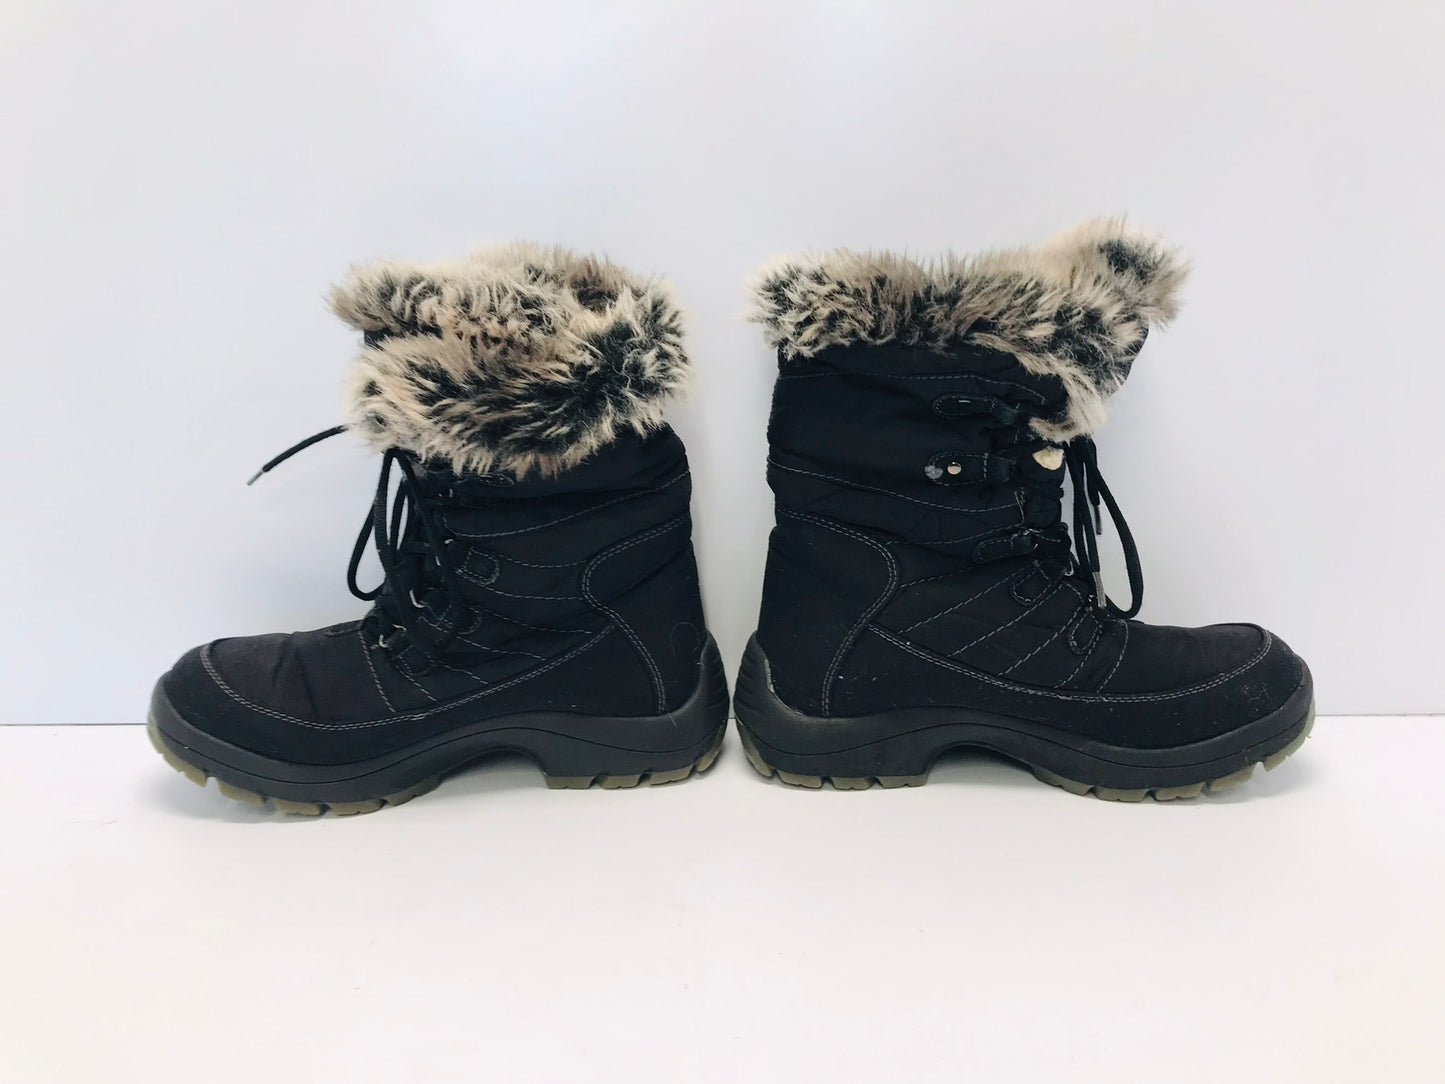 Winter Boots Ladies Size 7 Black With Faux Fur Excellent